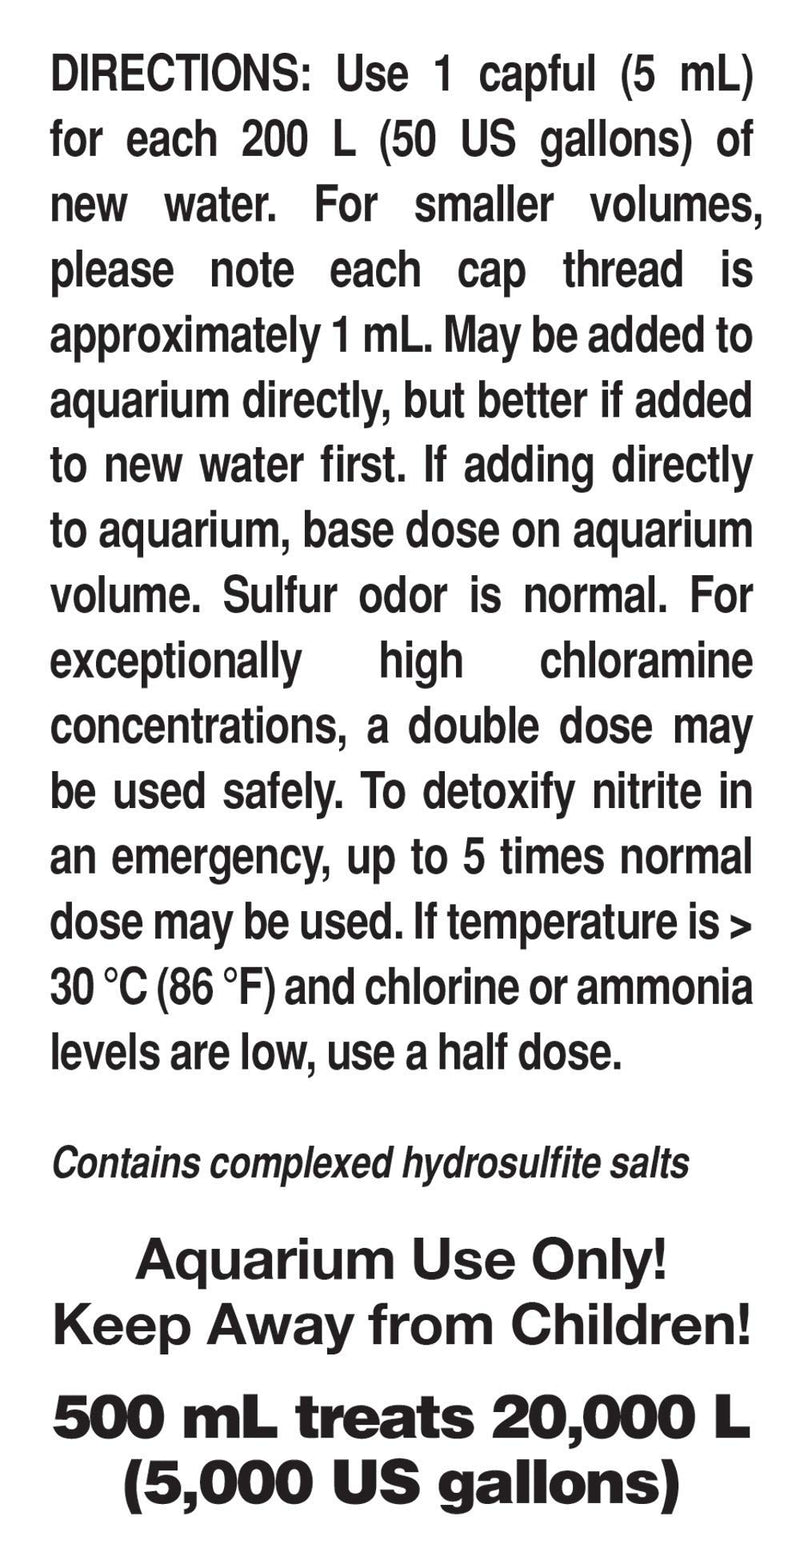 Seachem Prime Fresh and Saltwater Conditioner - Chemical Remover and Detoxifier 16.91 Fl Oz (Pack of 1) - LeoForward Australia